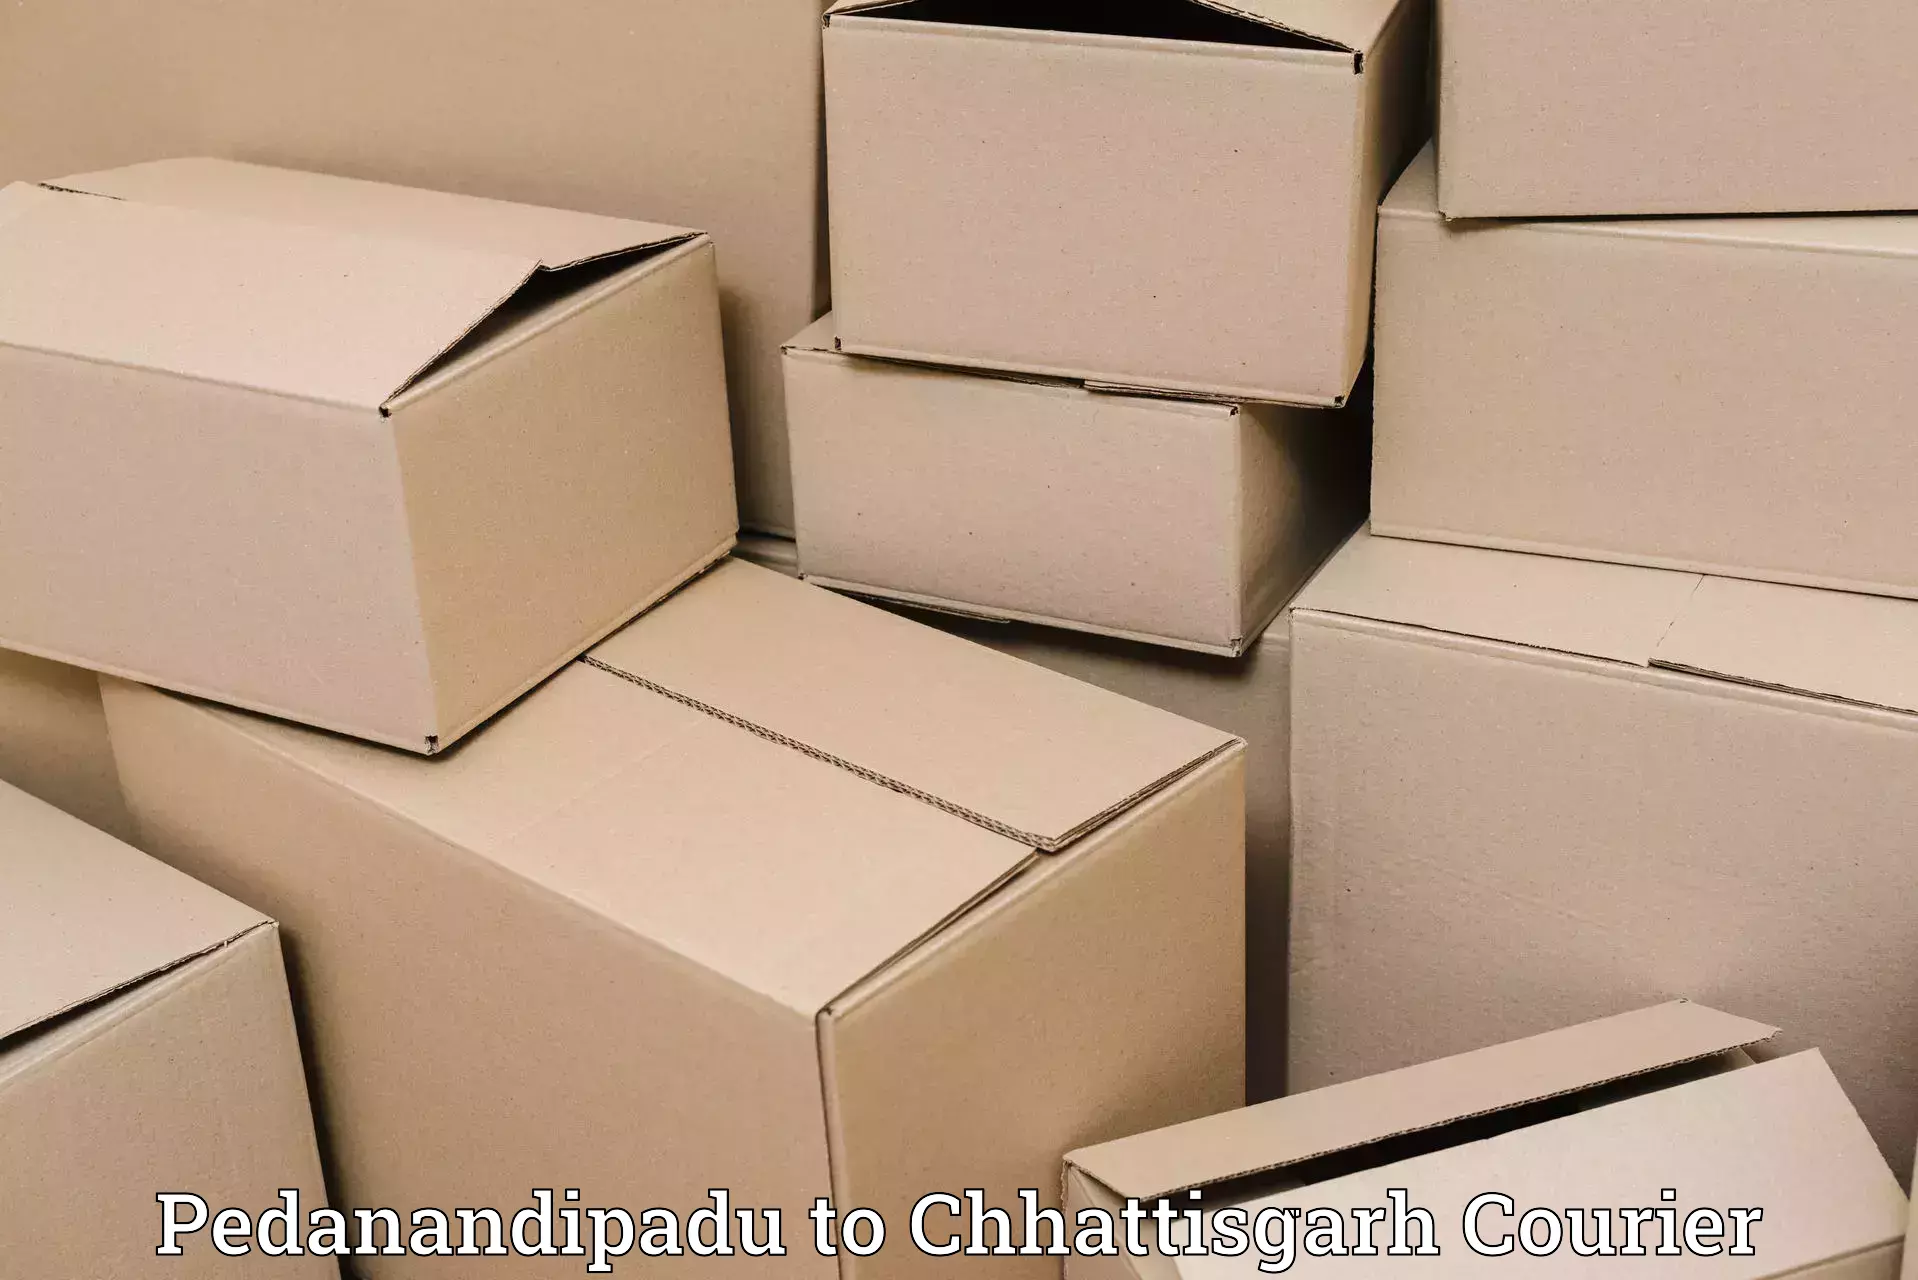 Ground shipping Pedanandipadu to Korea Chhattisgarh